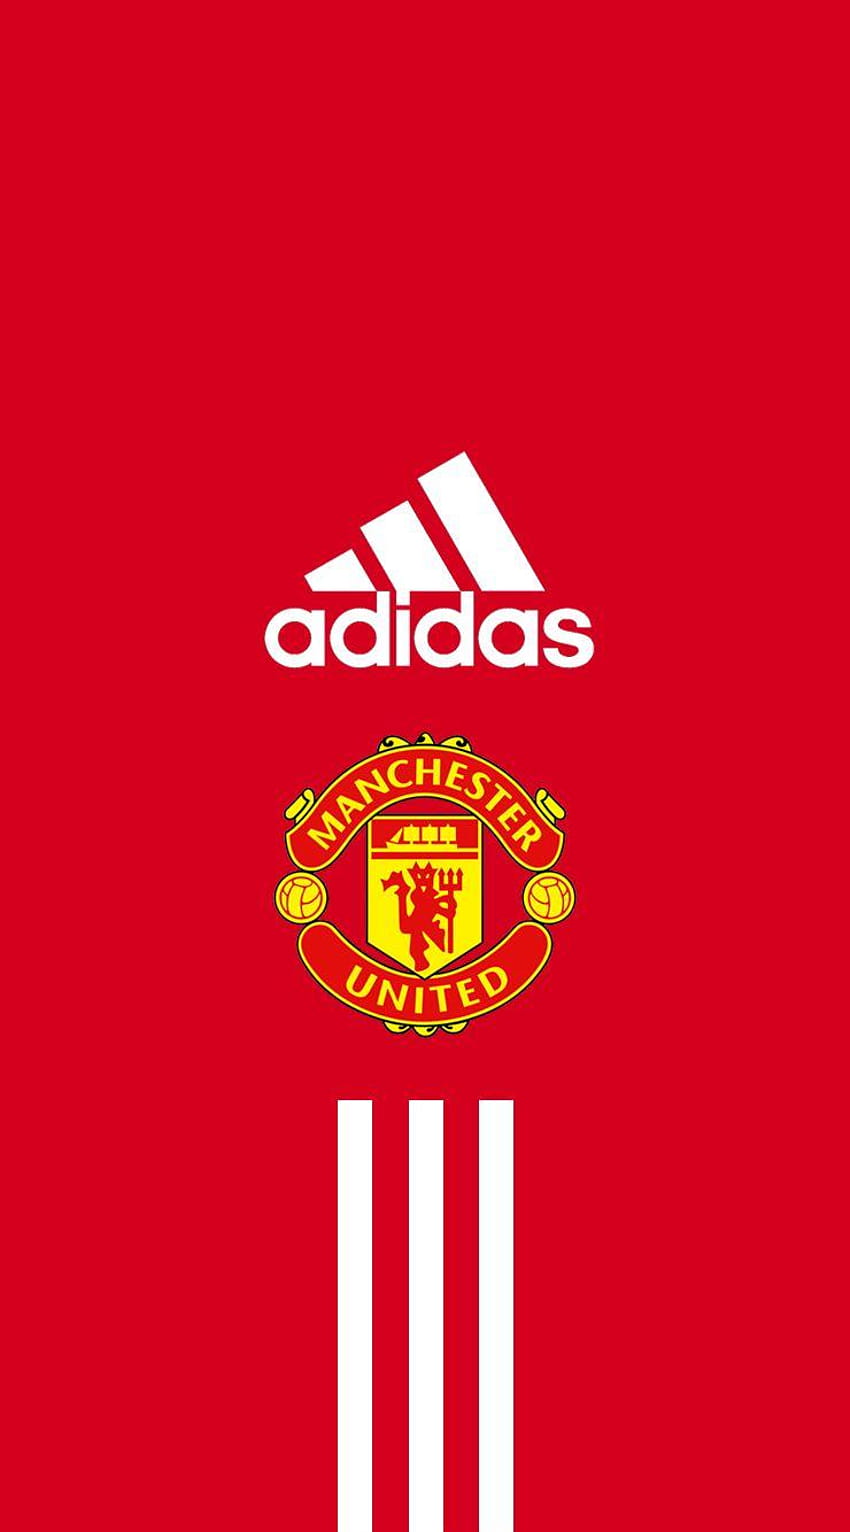 6 Adidas Manchester United, man utd jugadores android 2019 fondo de pantalla del teléfono